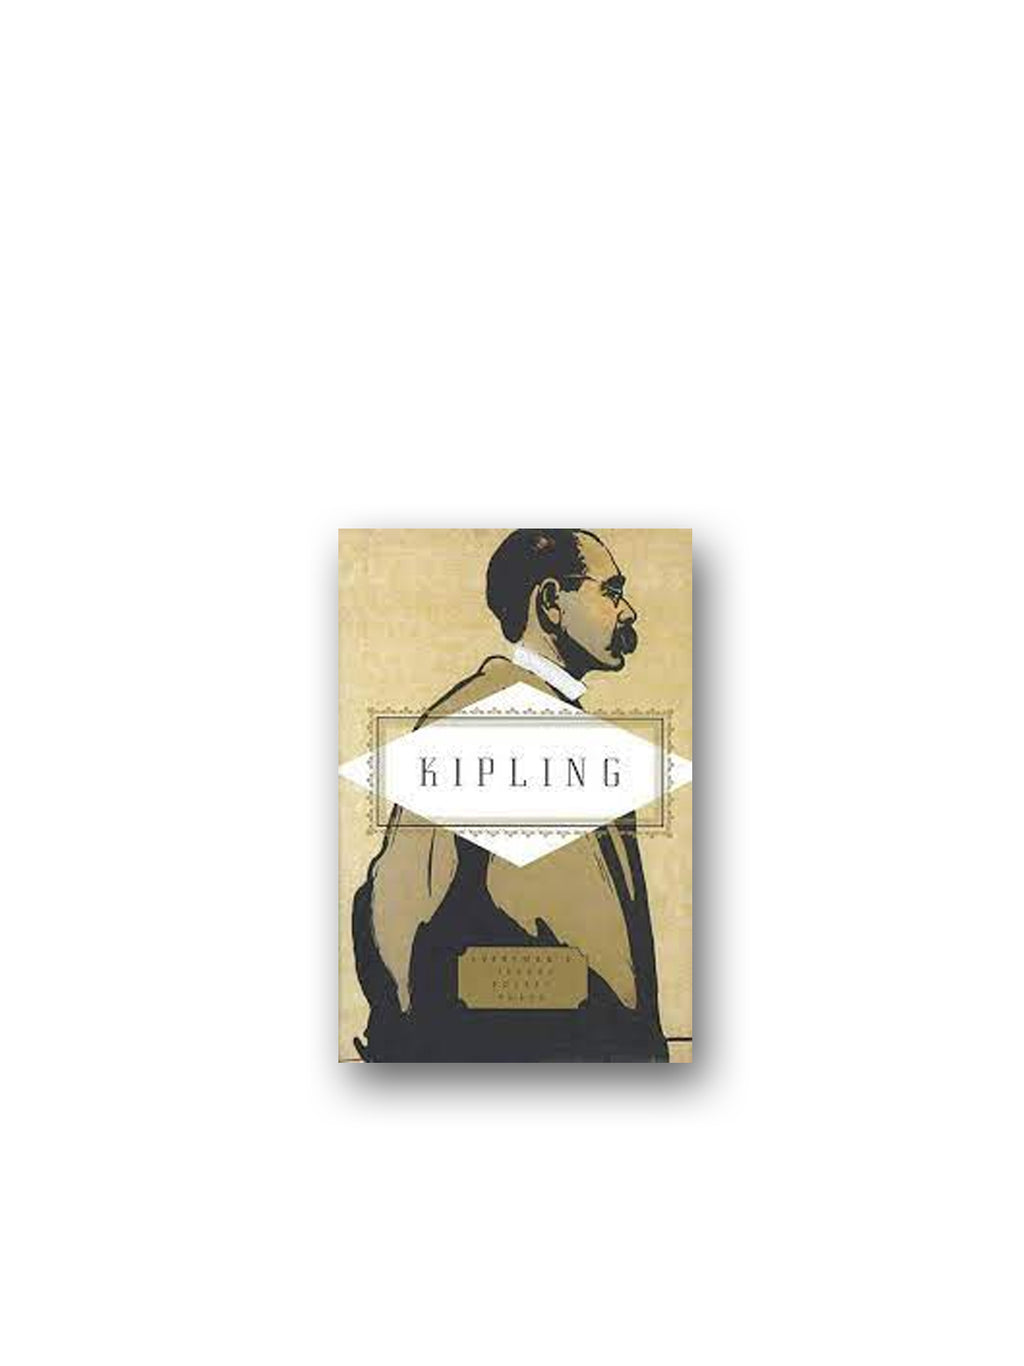 Kipling - Everyman's Library Pocket Poets